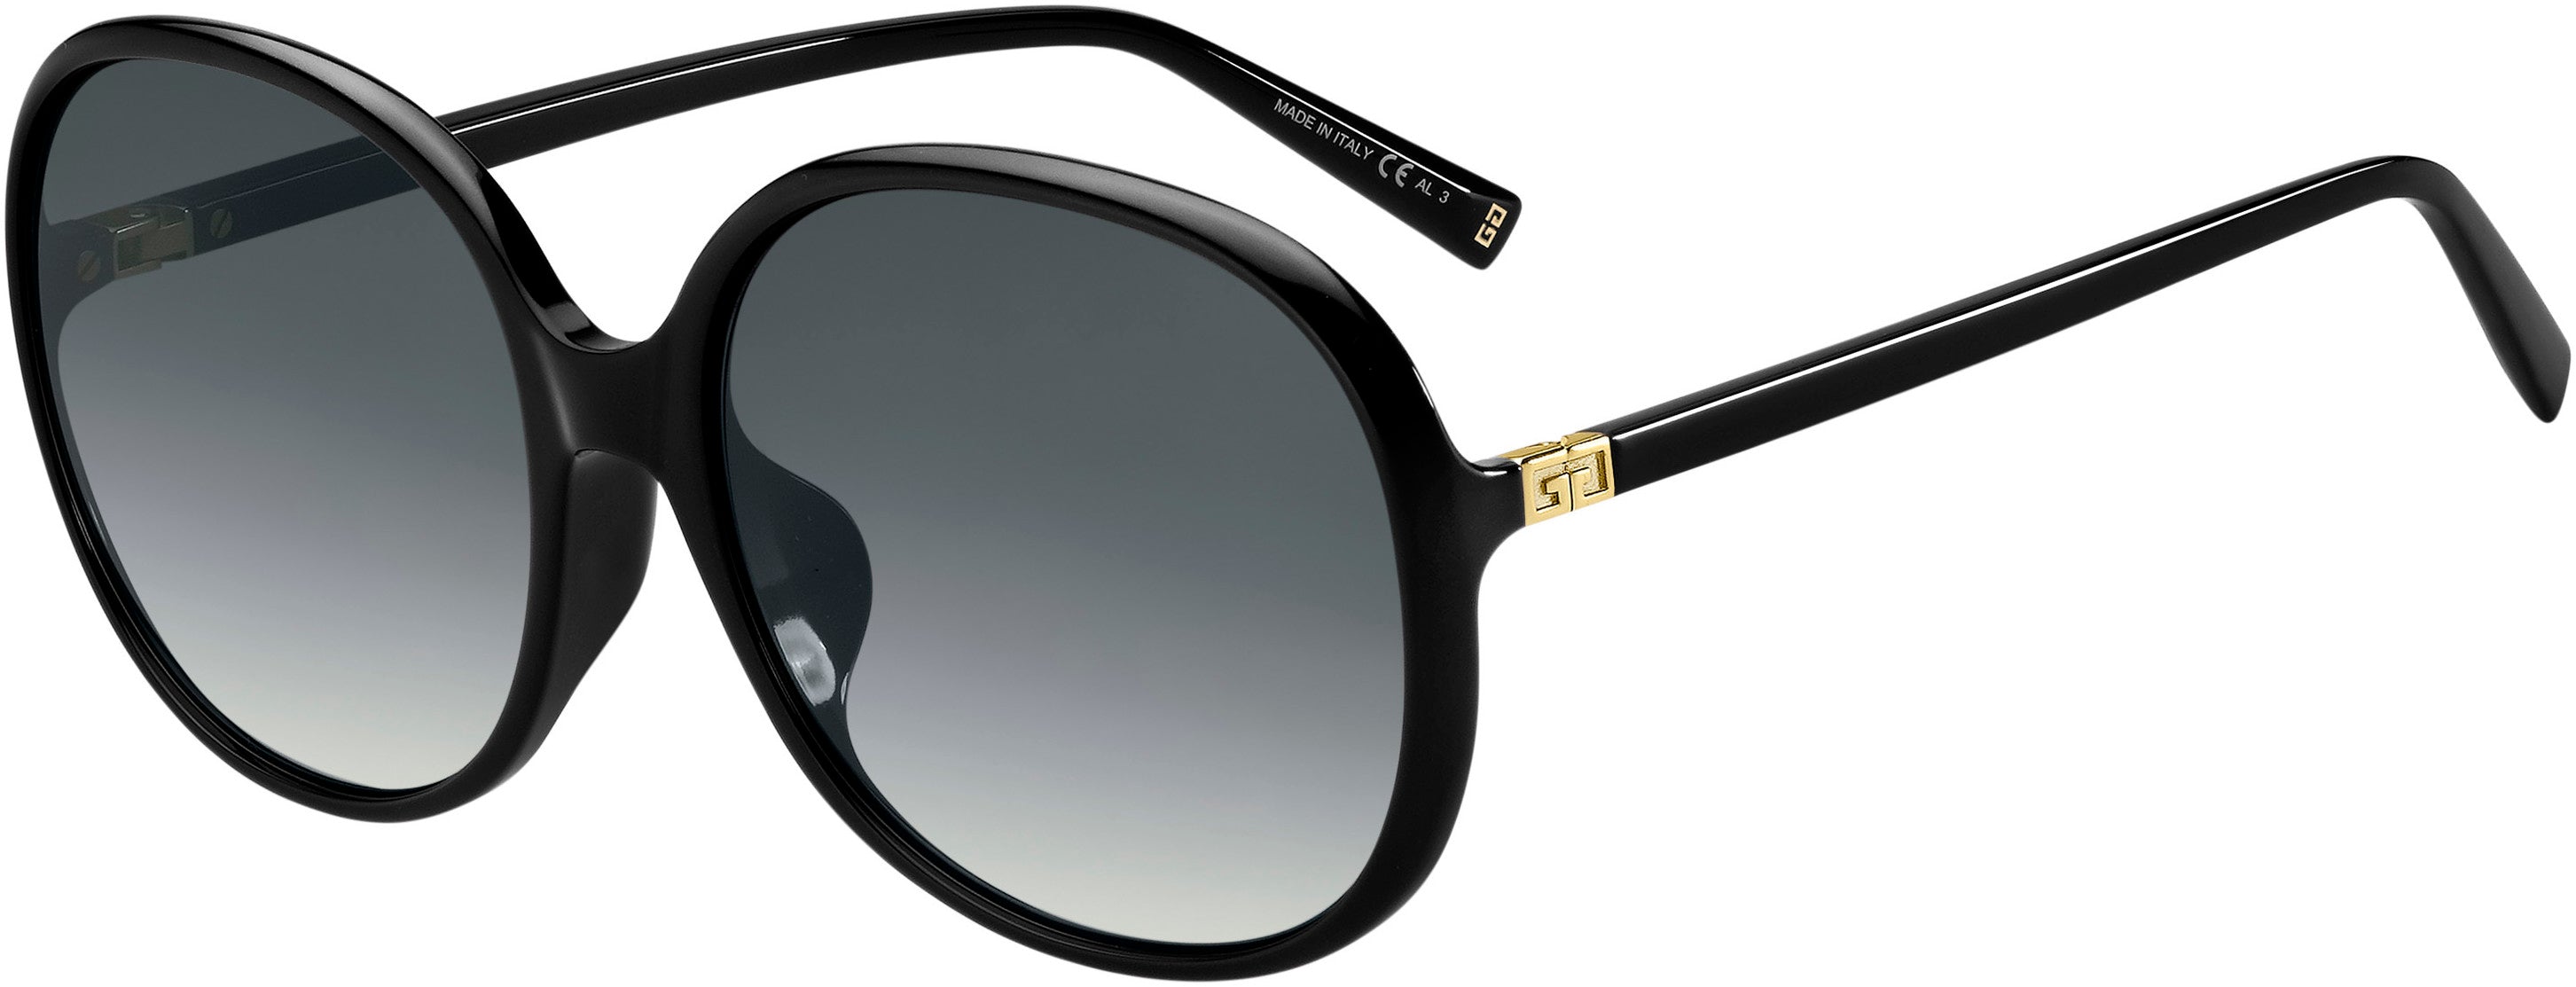  Givenchy 7172/F/S Oval Modified Sunglasses 0807-0807  Black (9O Dark Gray Gradient)